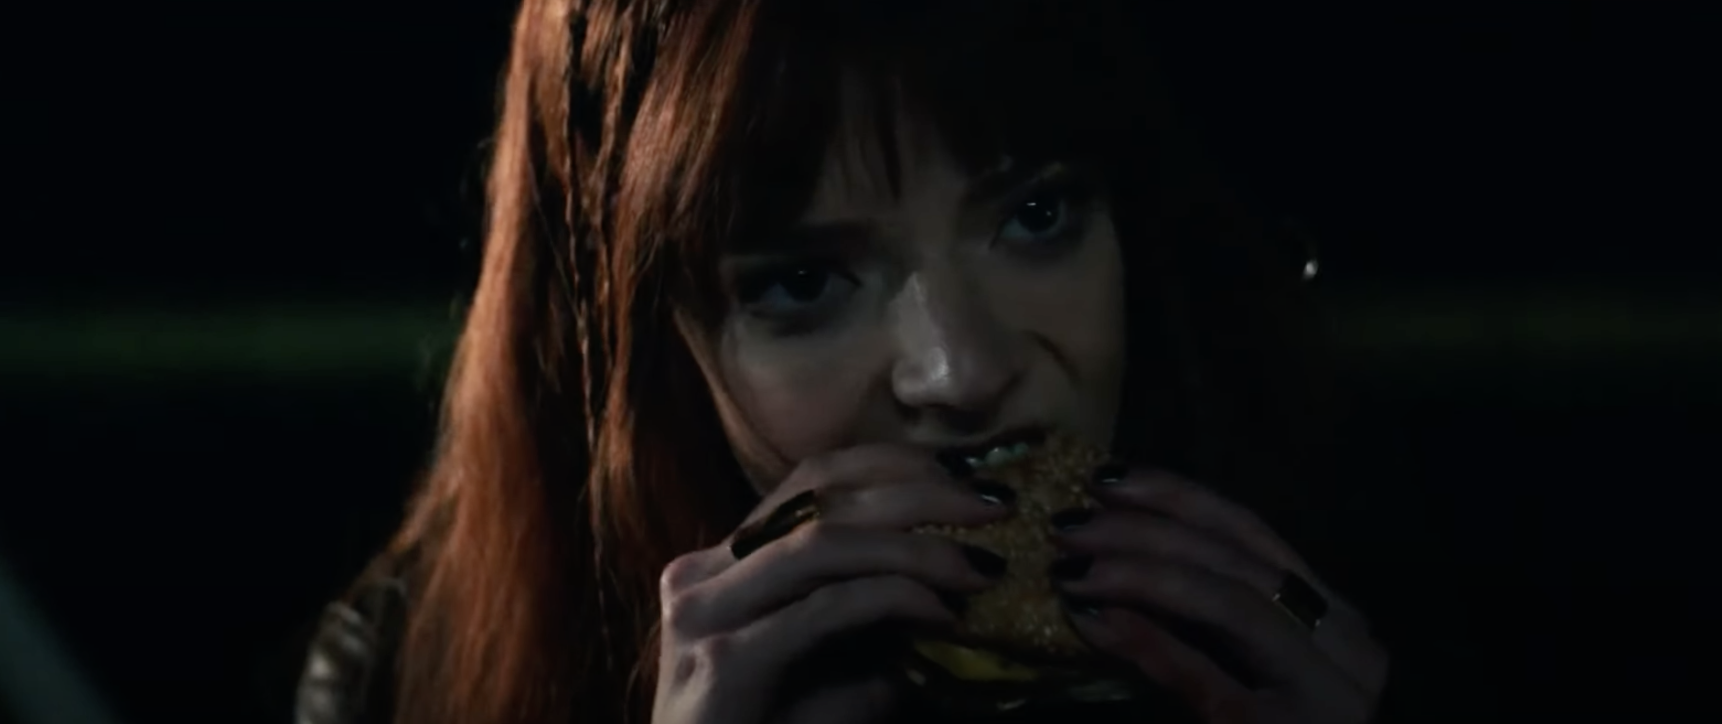 A woman eats a cheeseburger